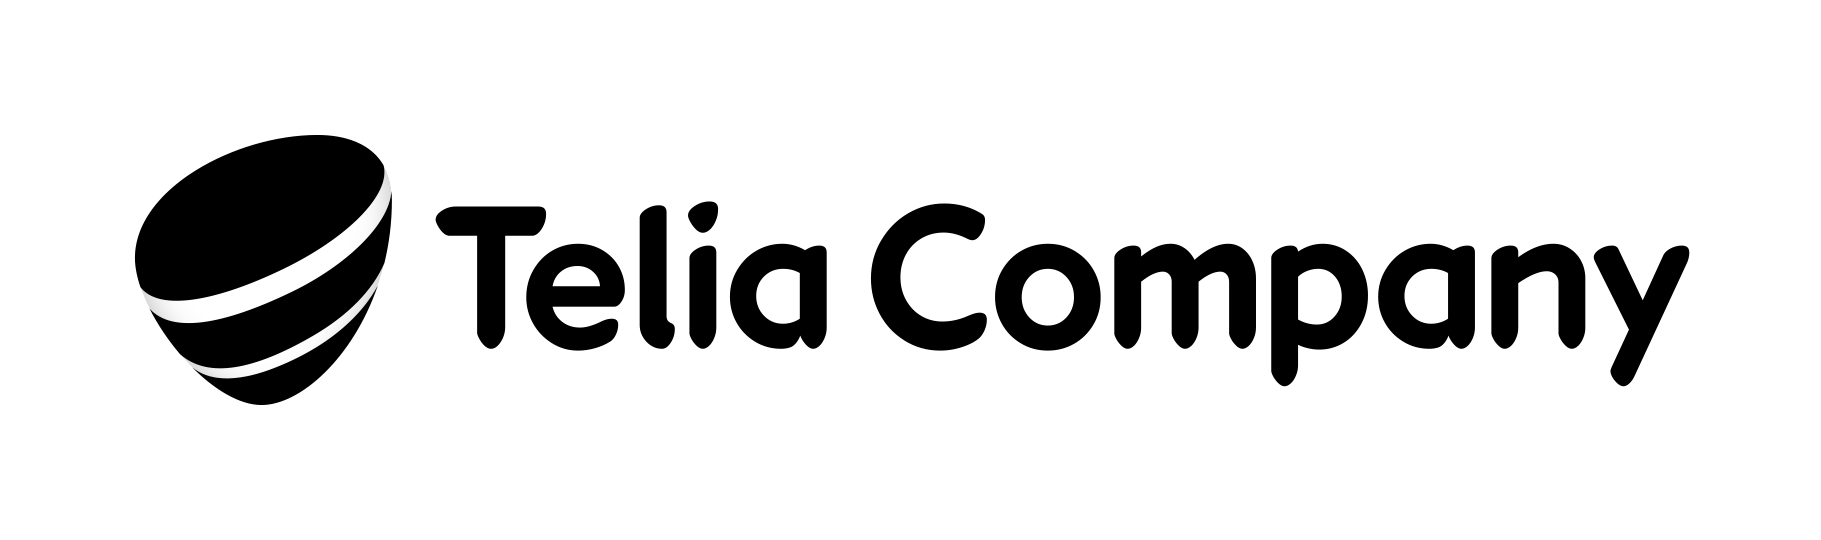 Company White Logo - Our logotype - Telia Company